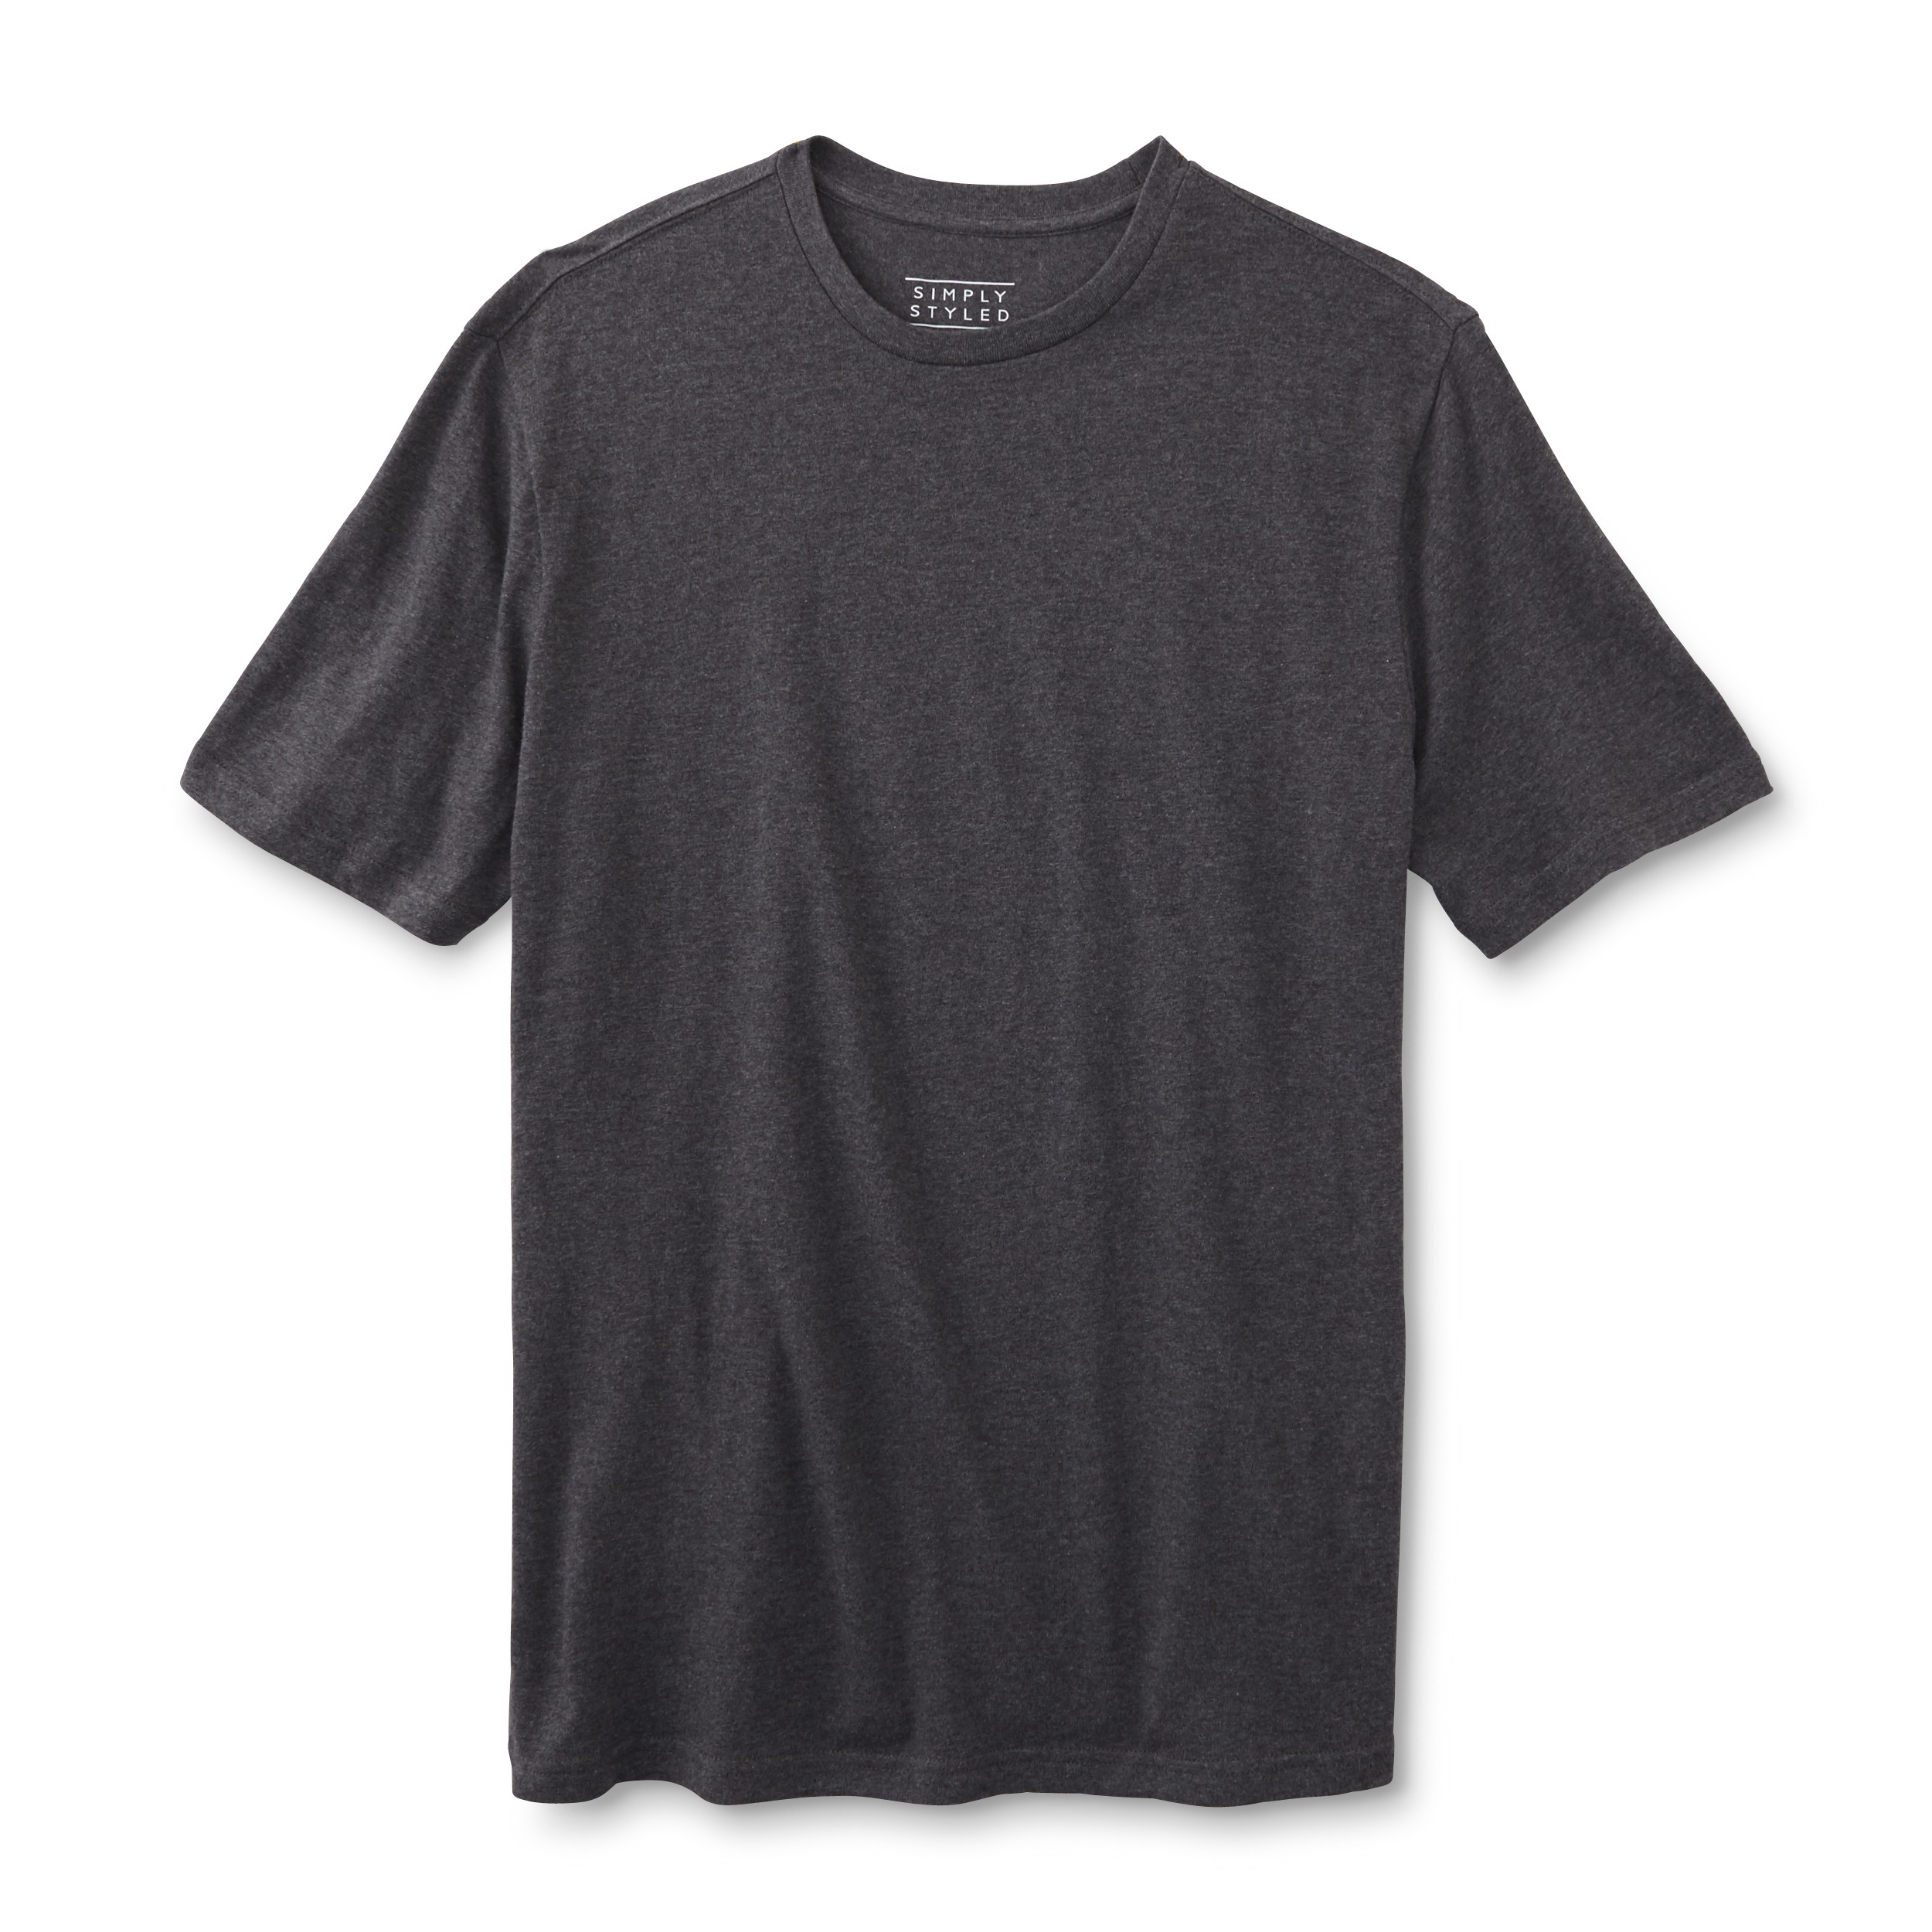 Simply Styled Men's Short-Sleeve T-Shirt